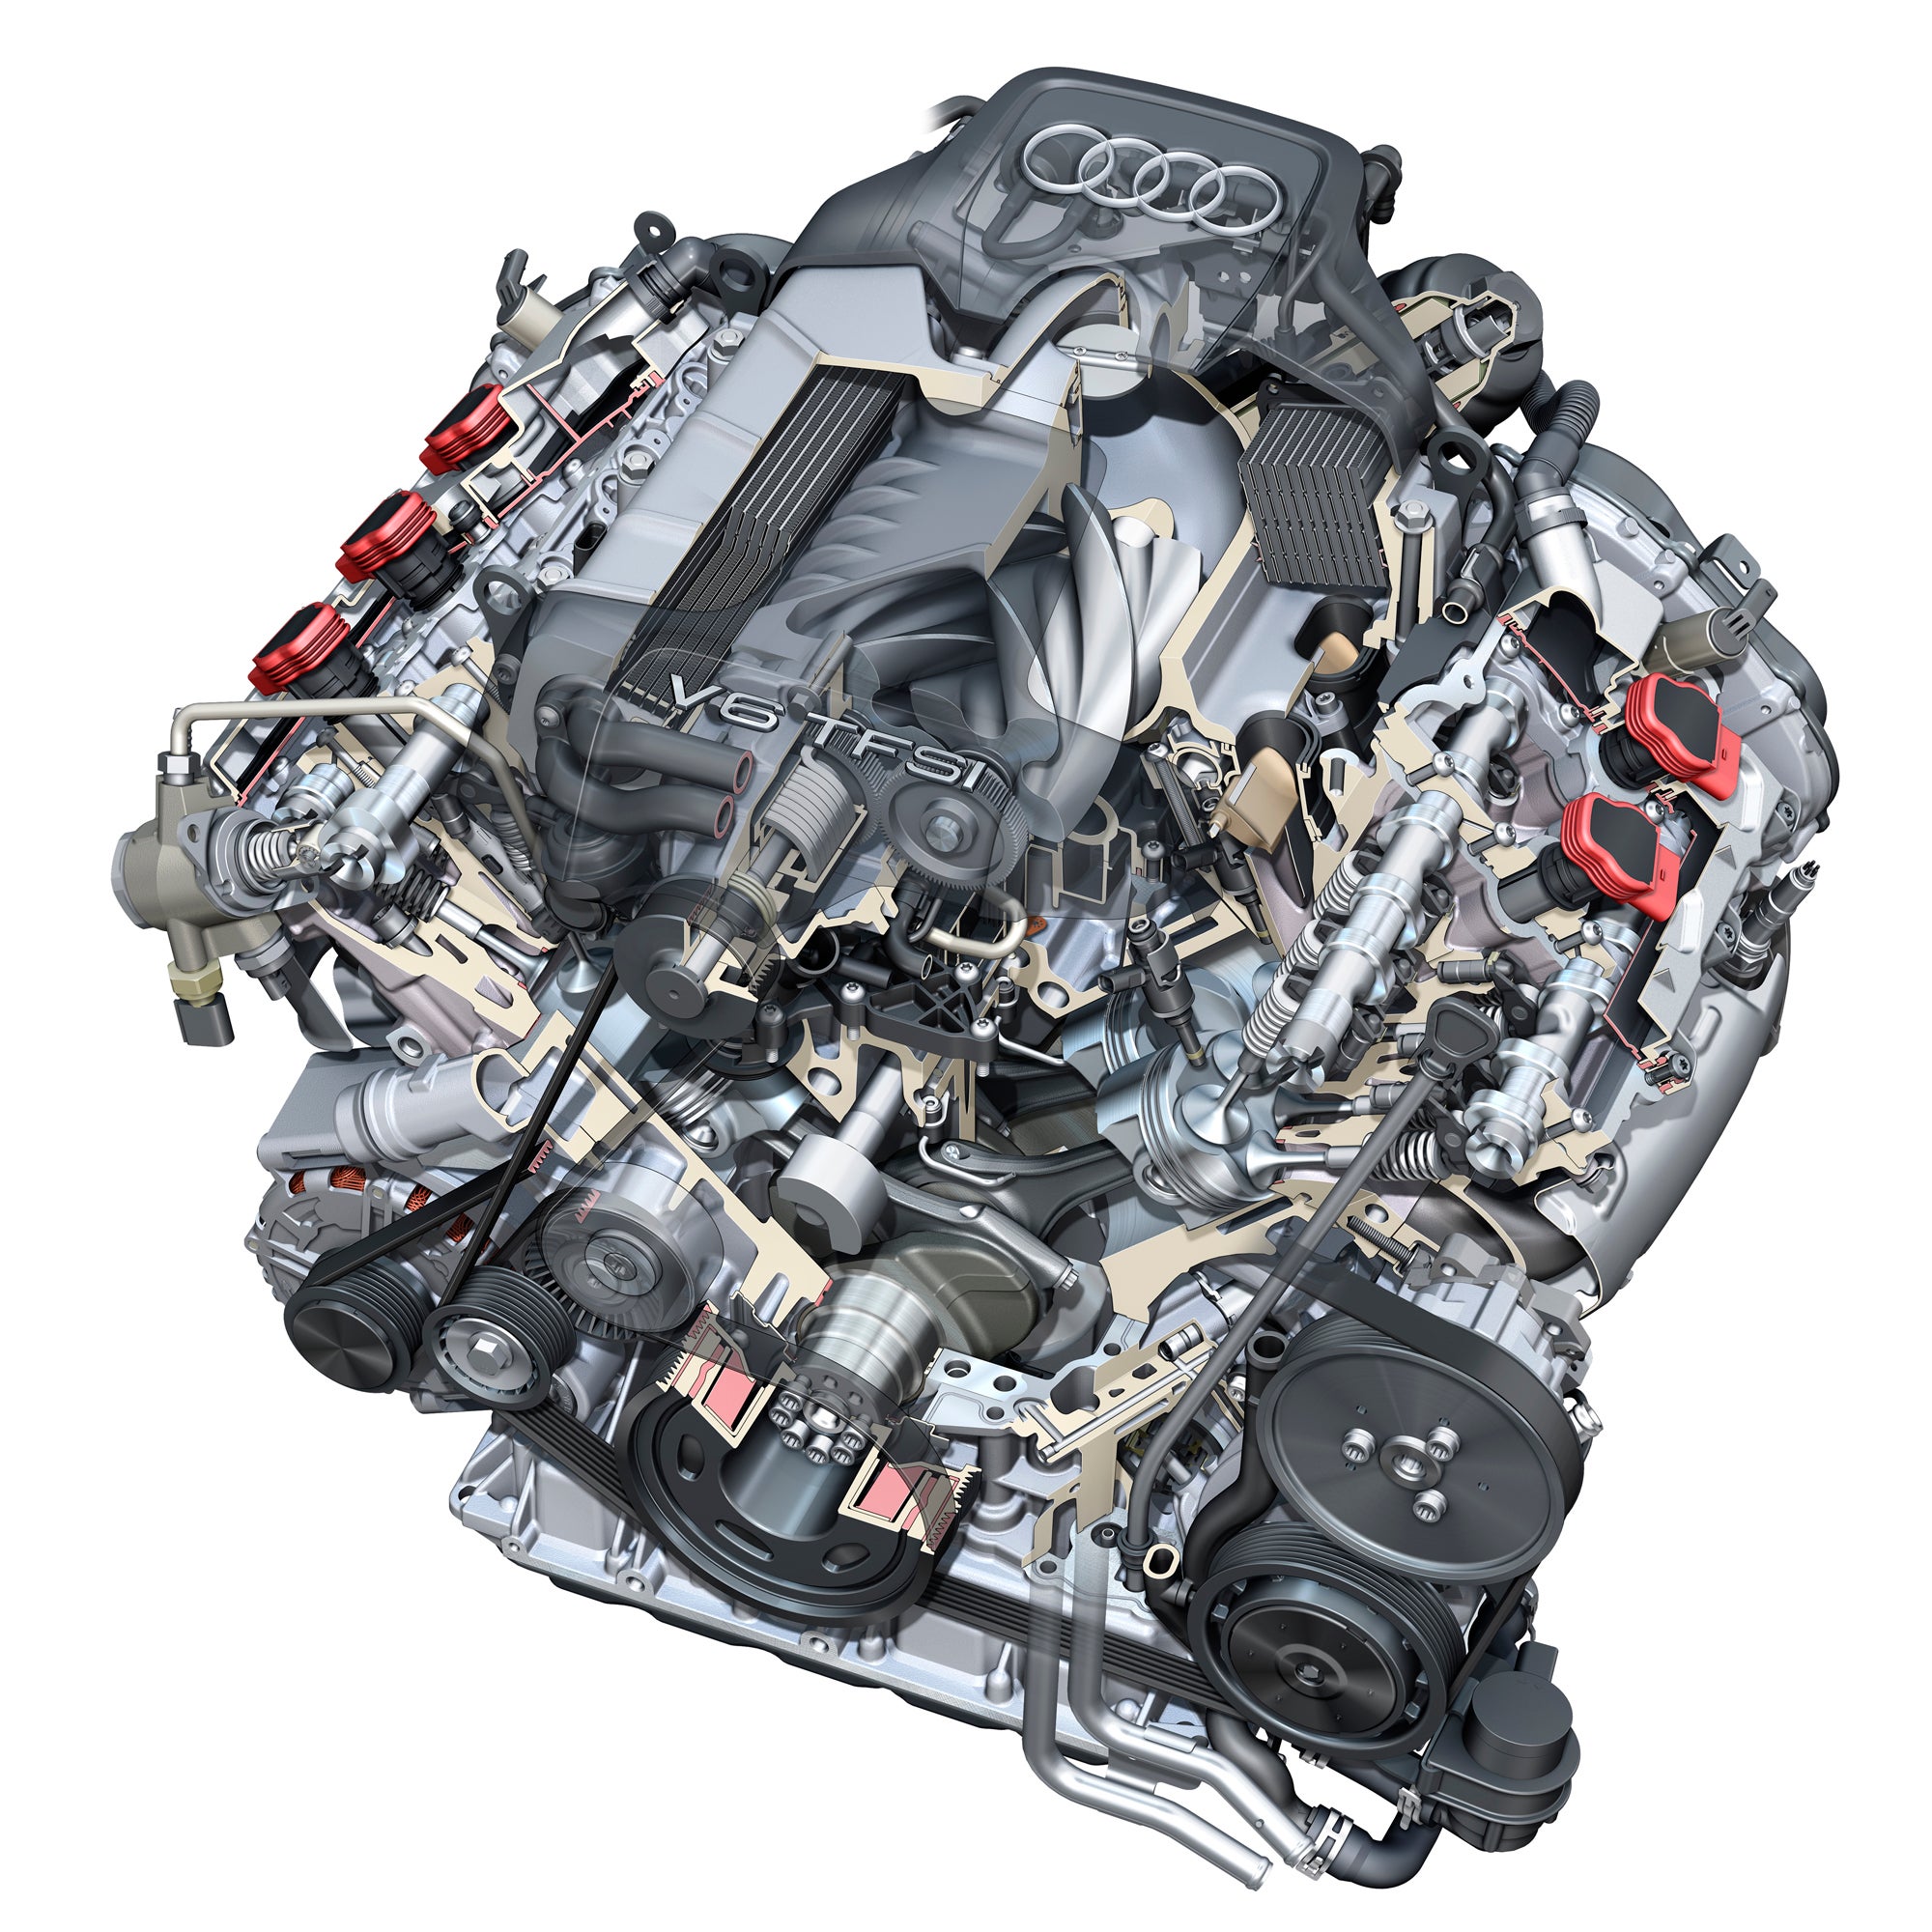 Ауди двиг. Двигатель Ауди v6 3.0 TFSI. Двигатель Ауди v6 FSI. V6 3.0 TFSI Ауди а6. Q7 3.0 TFSI Audi мотор.